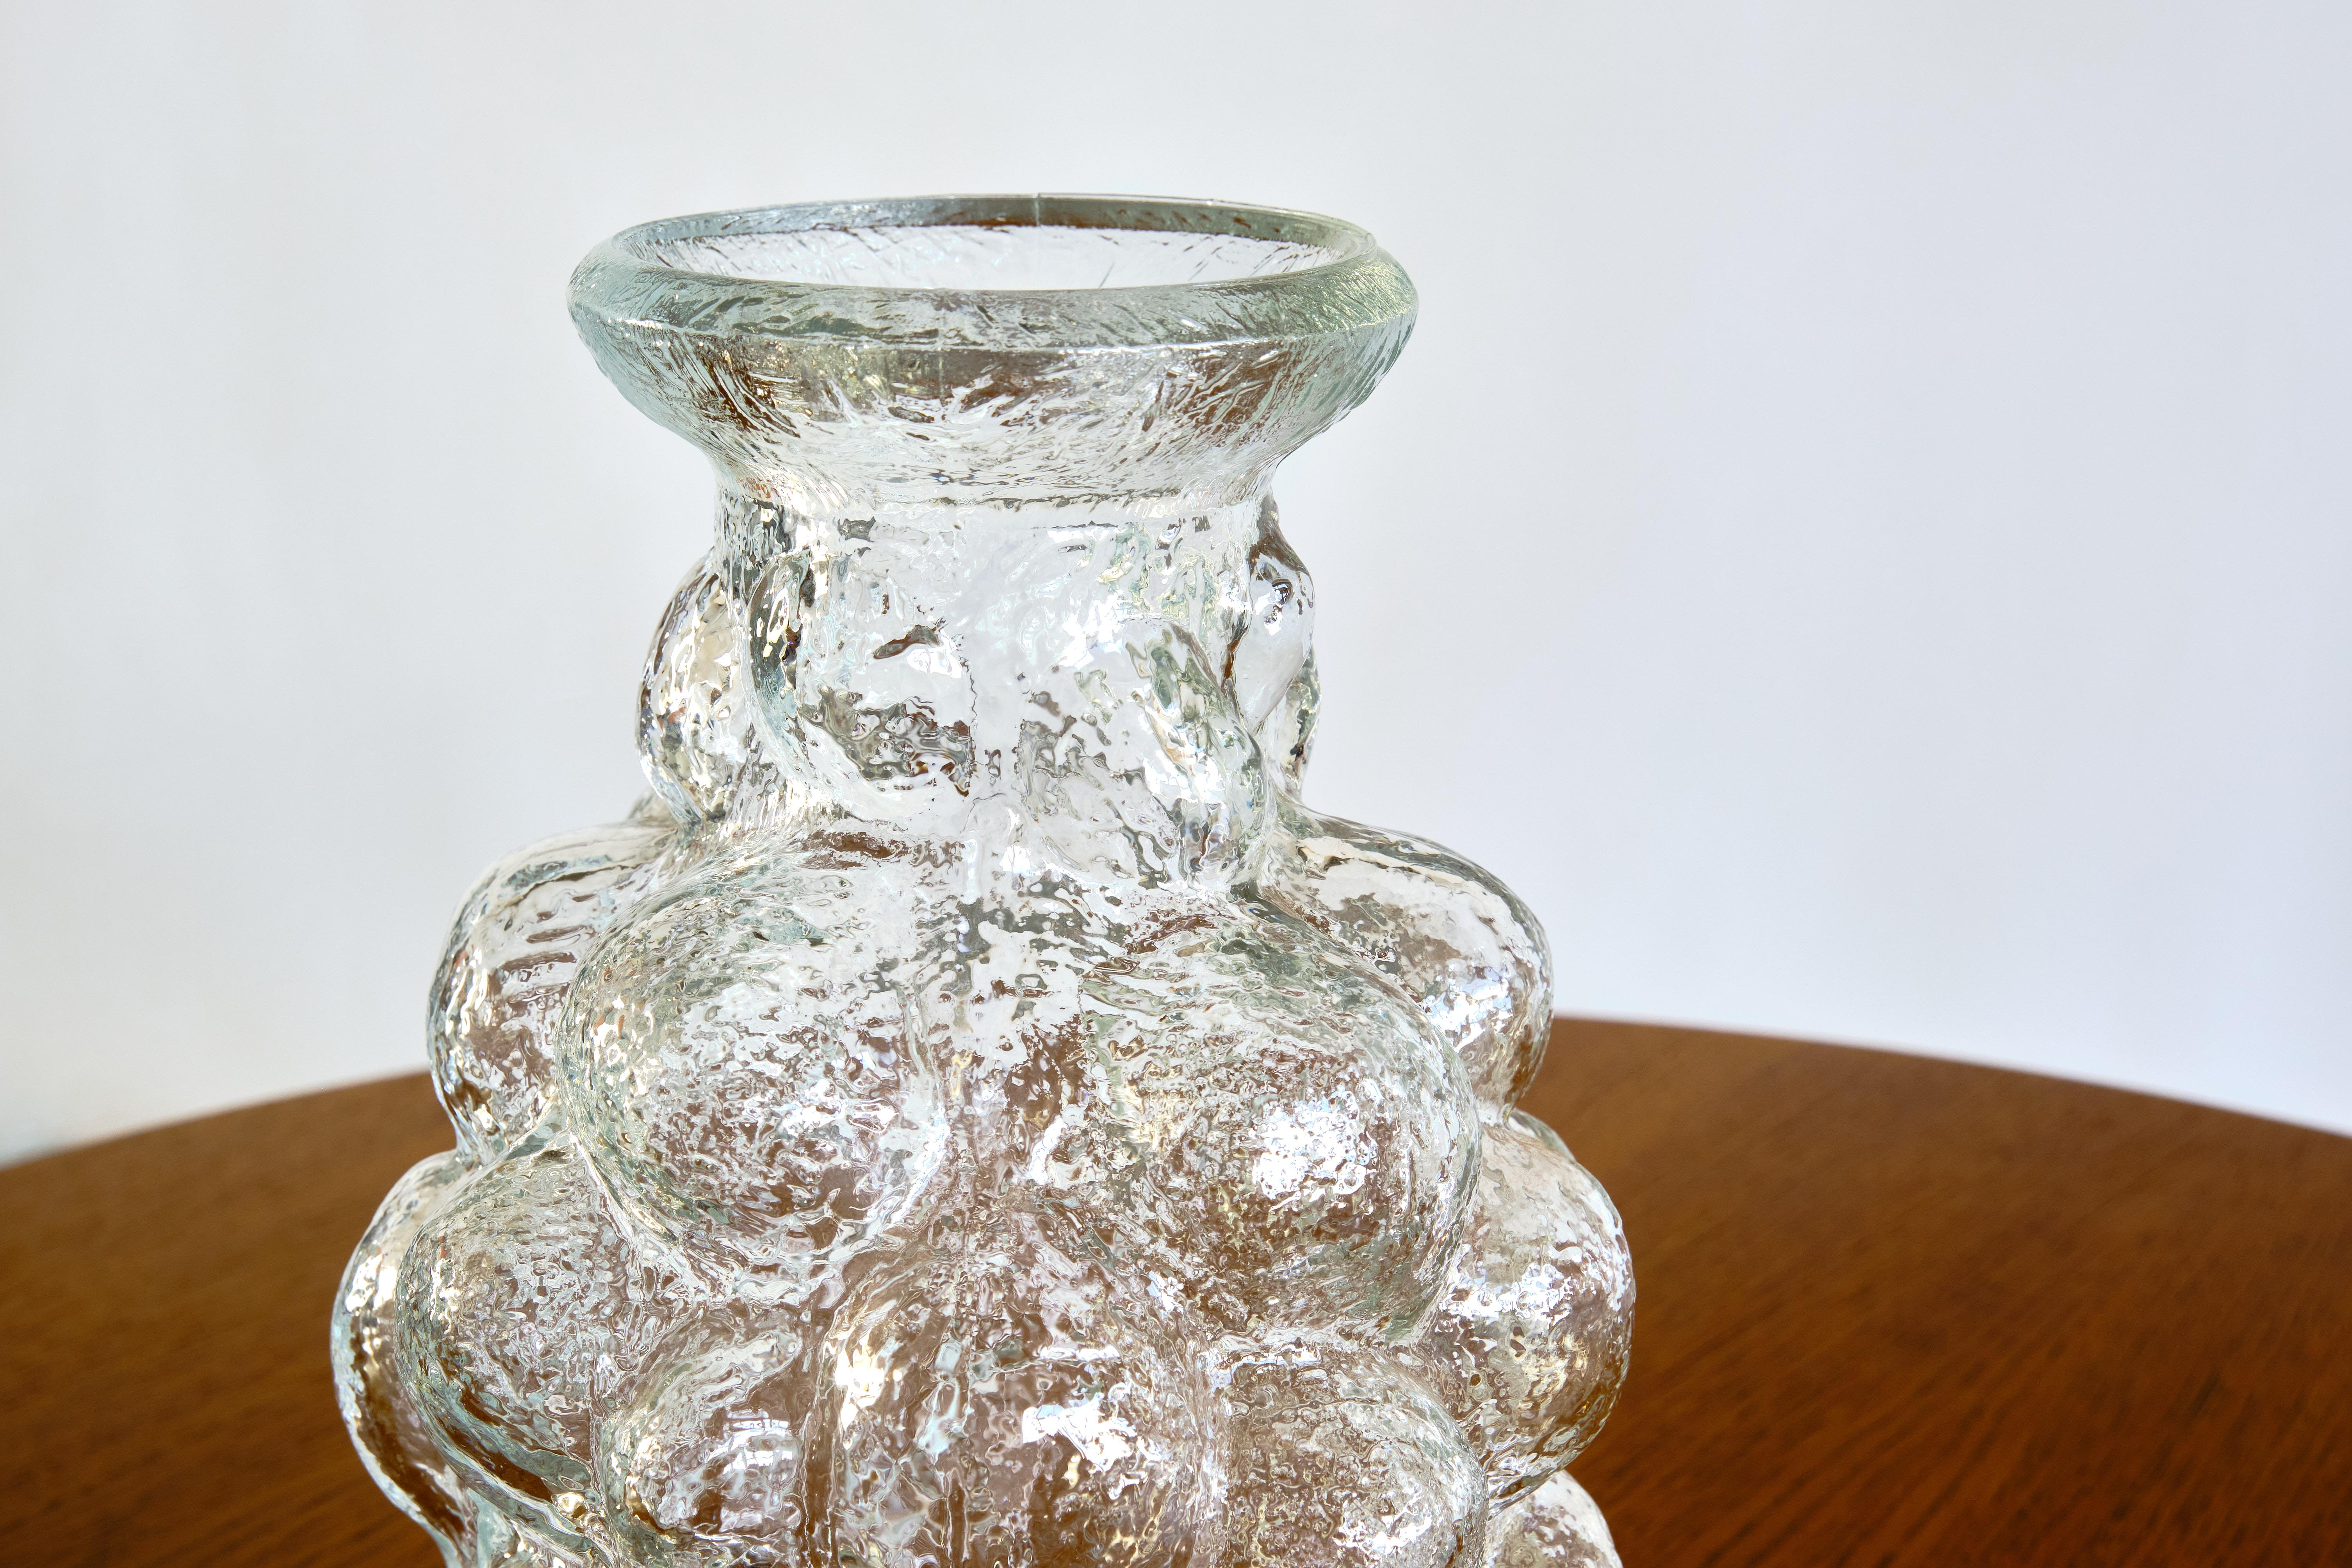 German Helena Tynell & Heinrich Gantenbrink Bubble Glass Vase, Glashütte Limburg, 1960s For Sale